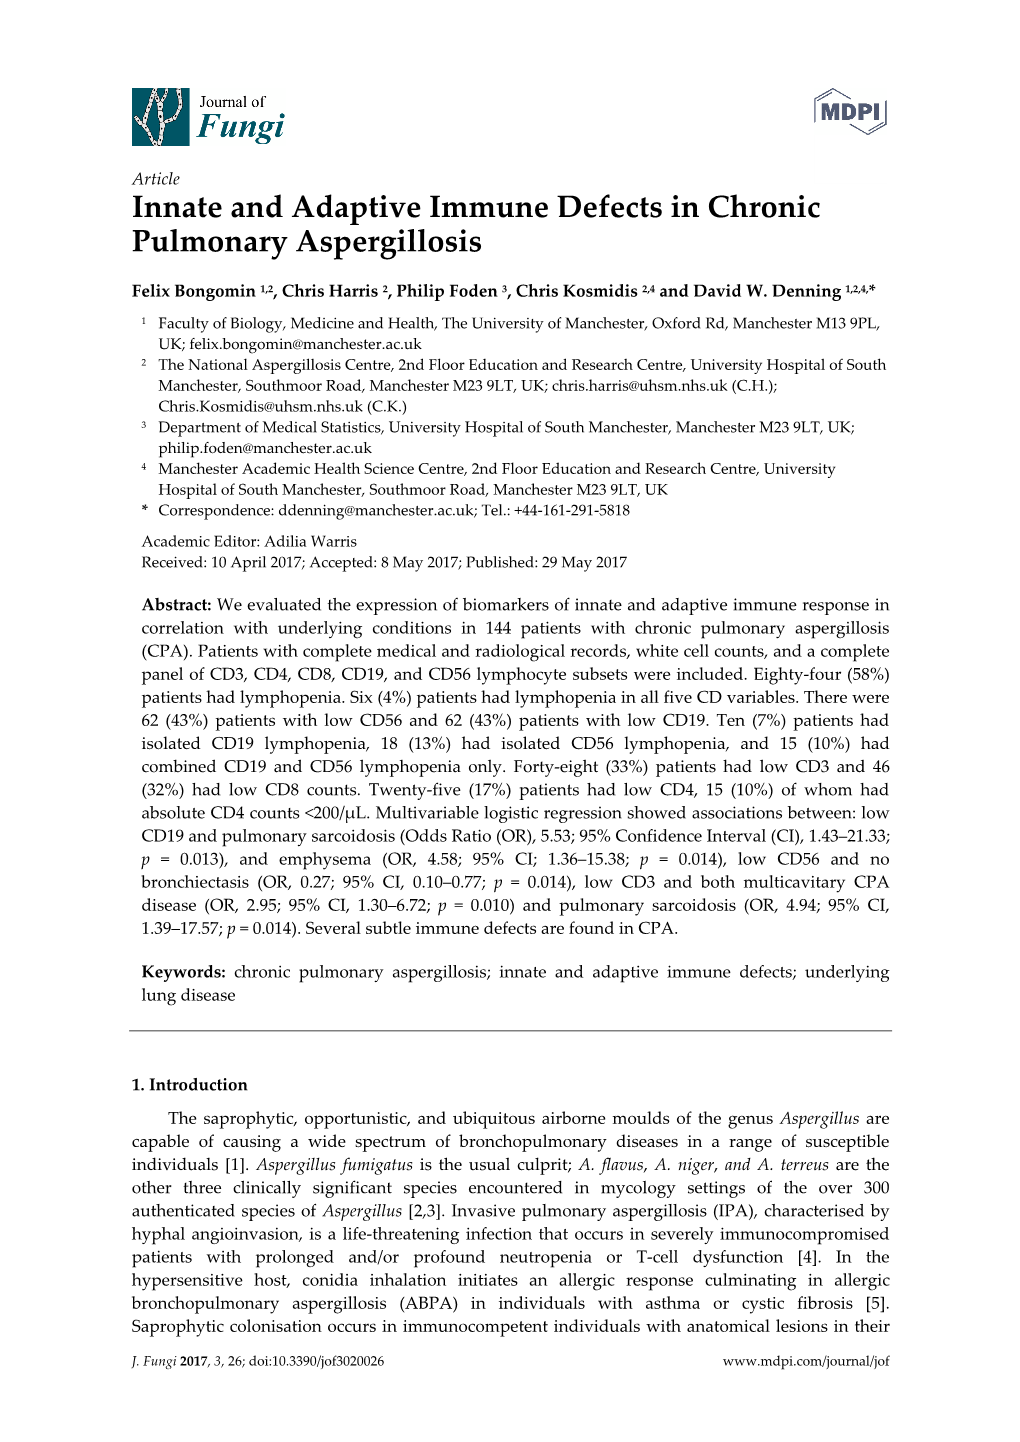 Innate and Adaptive Immune Defects in Chronic Pulmonary Aspergillosis